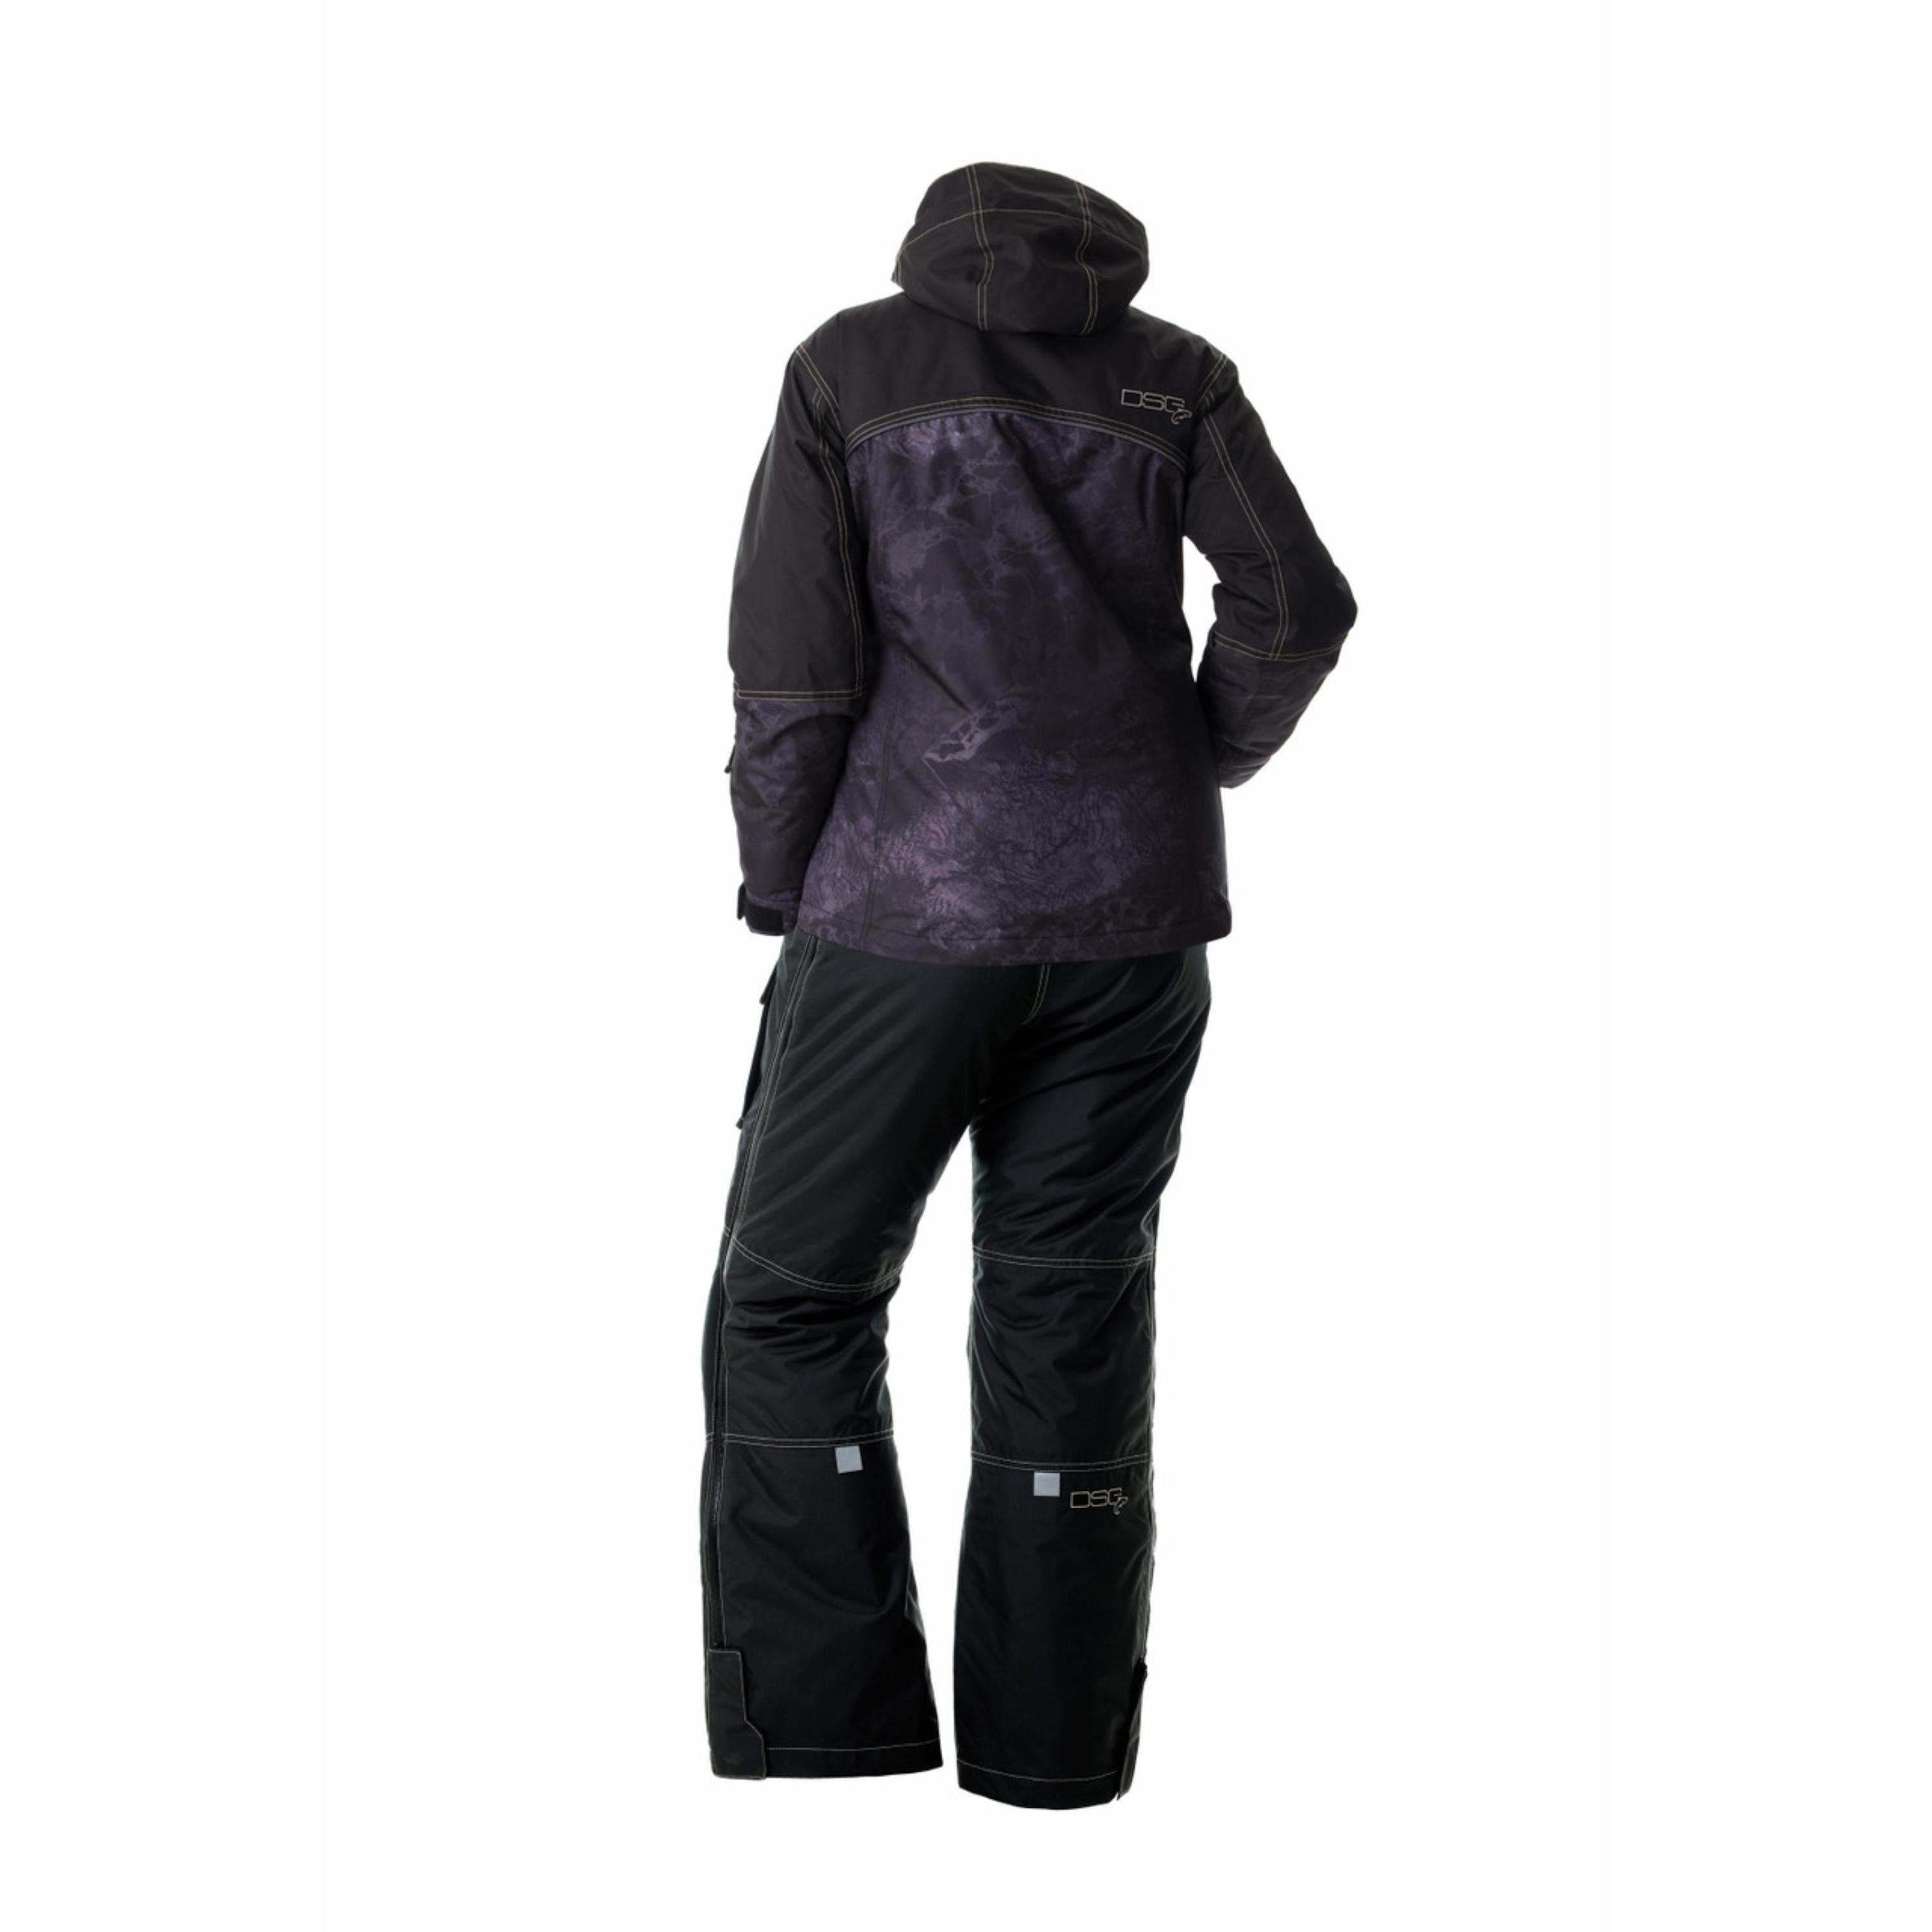 DSG Women's Arctic Appeal 2.0 Ice Jacket - Dusty Teal